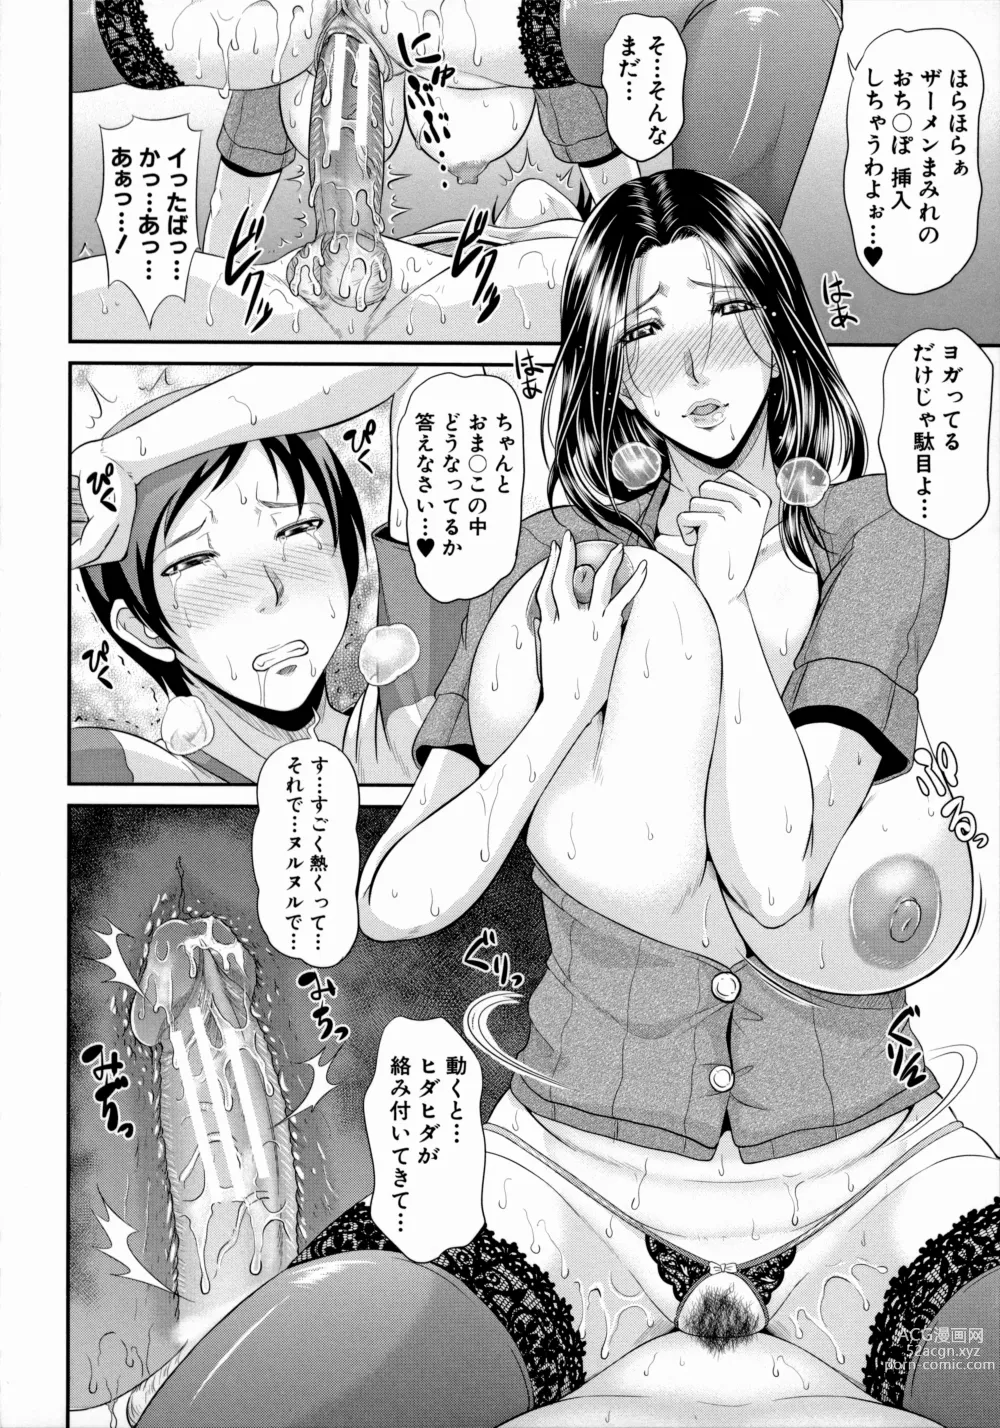 Page 190 of manga Uruwashi no Wife